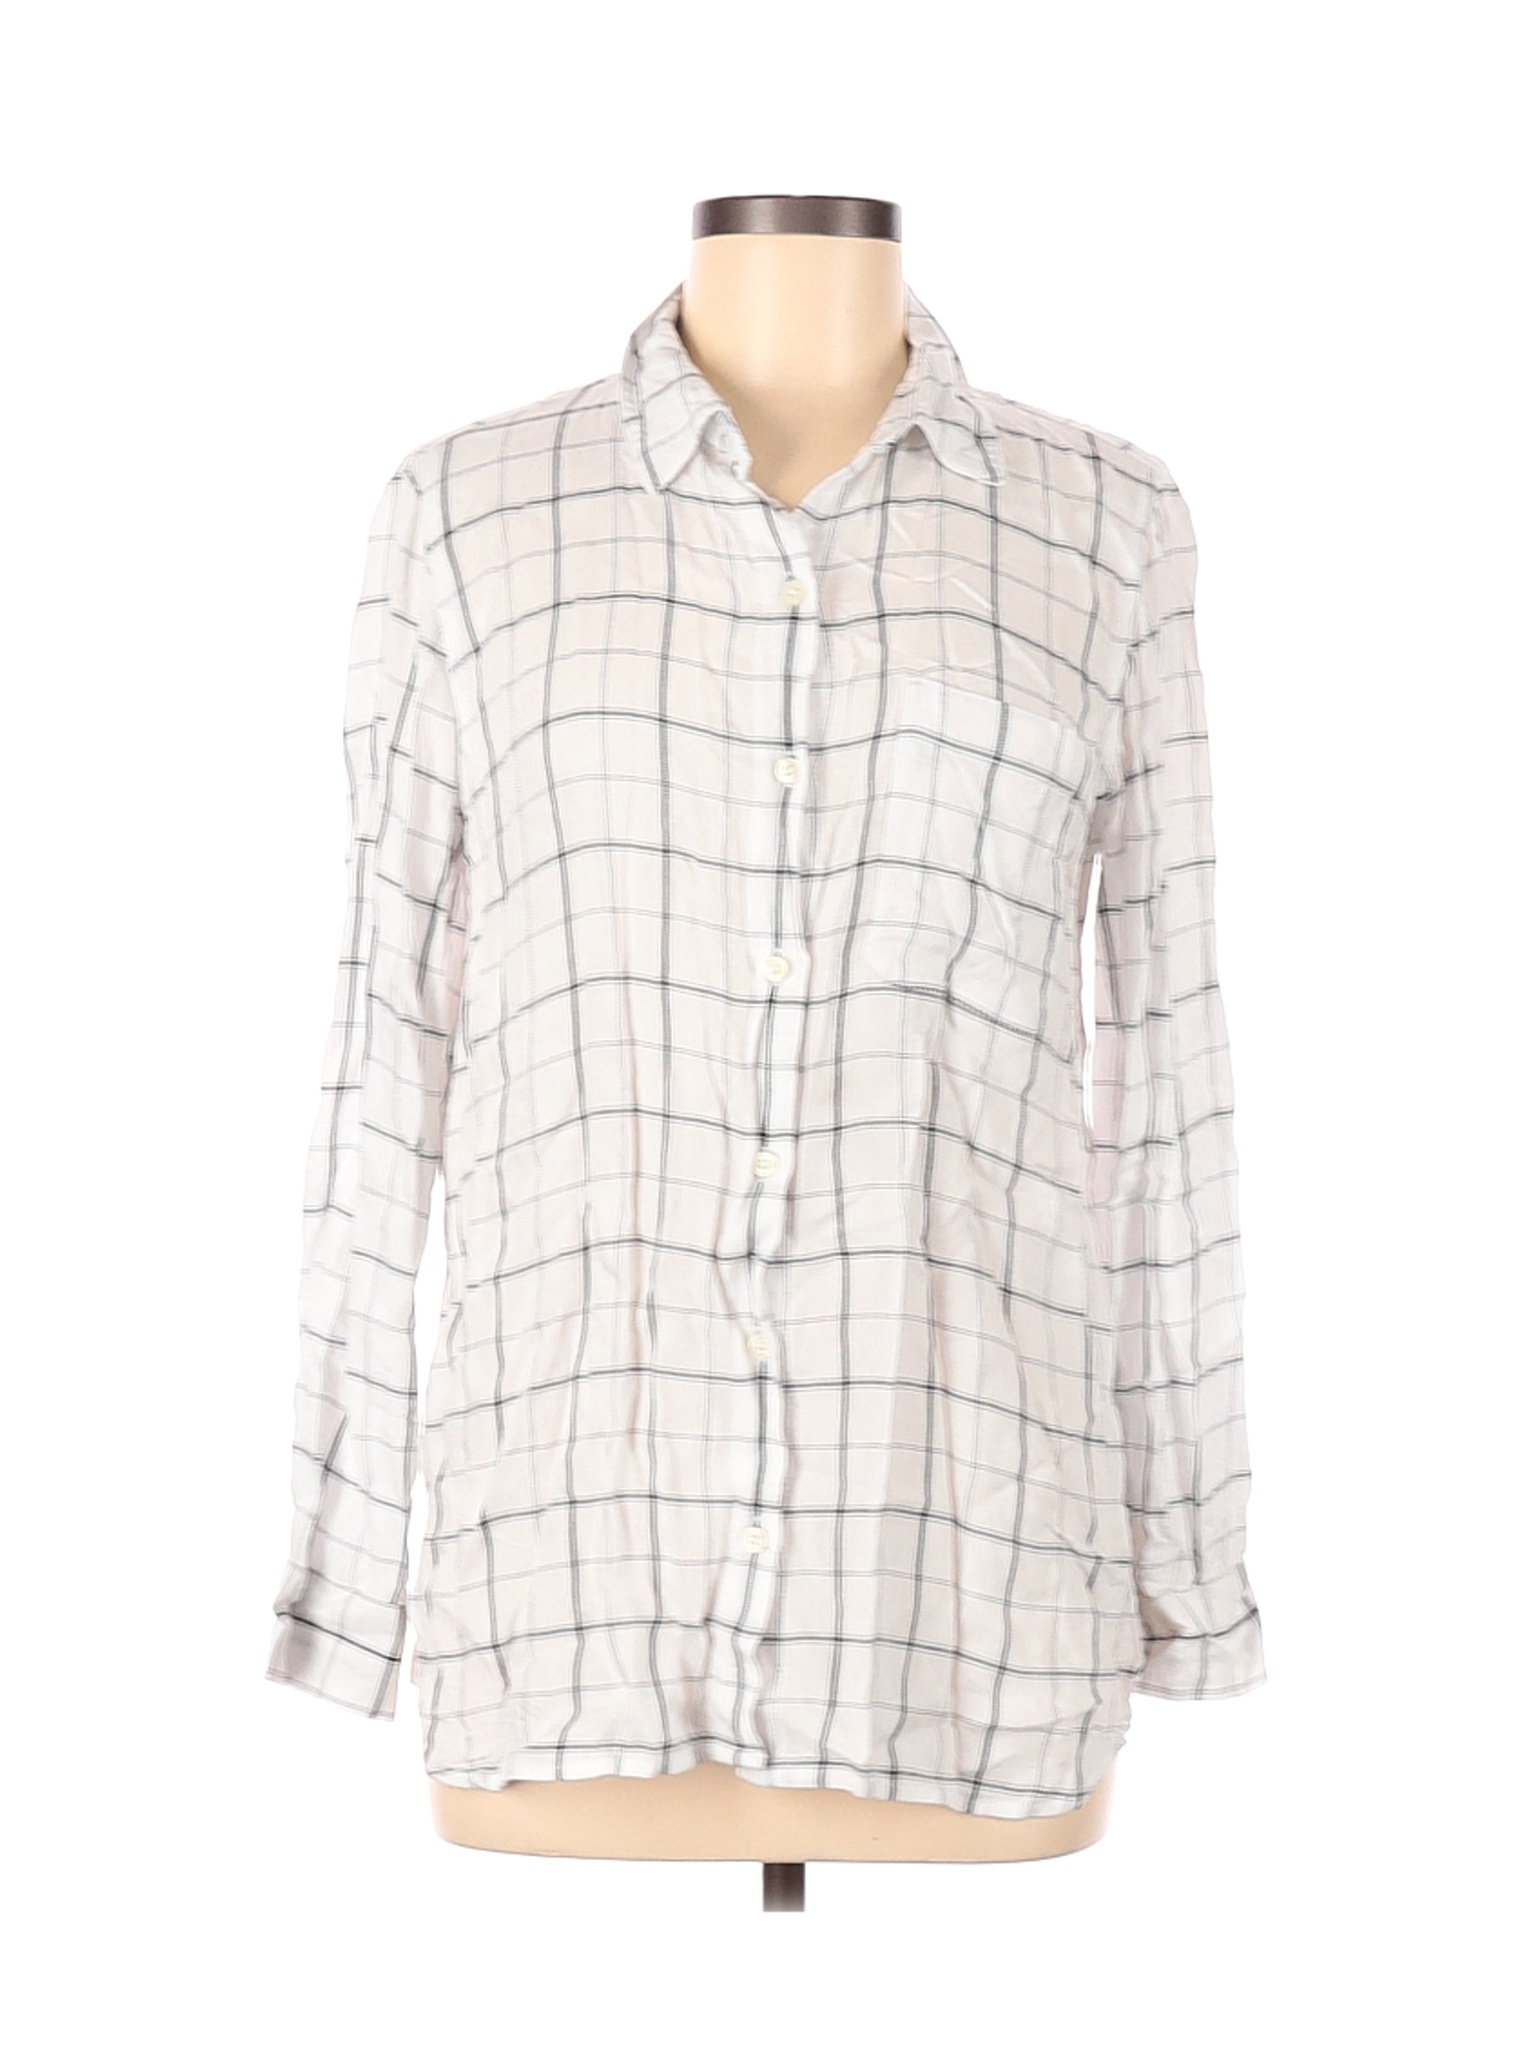 Old Navy Women White Long Sleeve Button-Down Shirt M | eBay